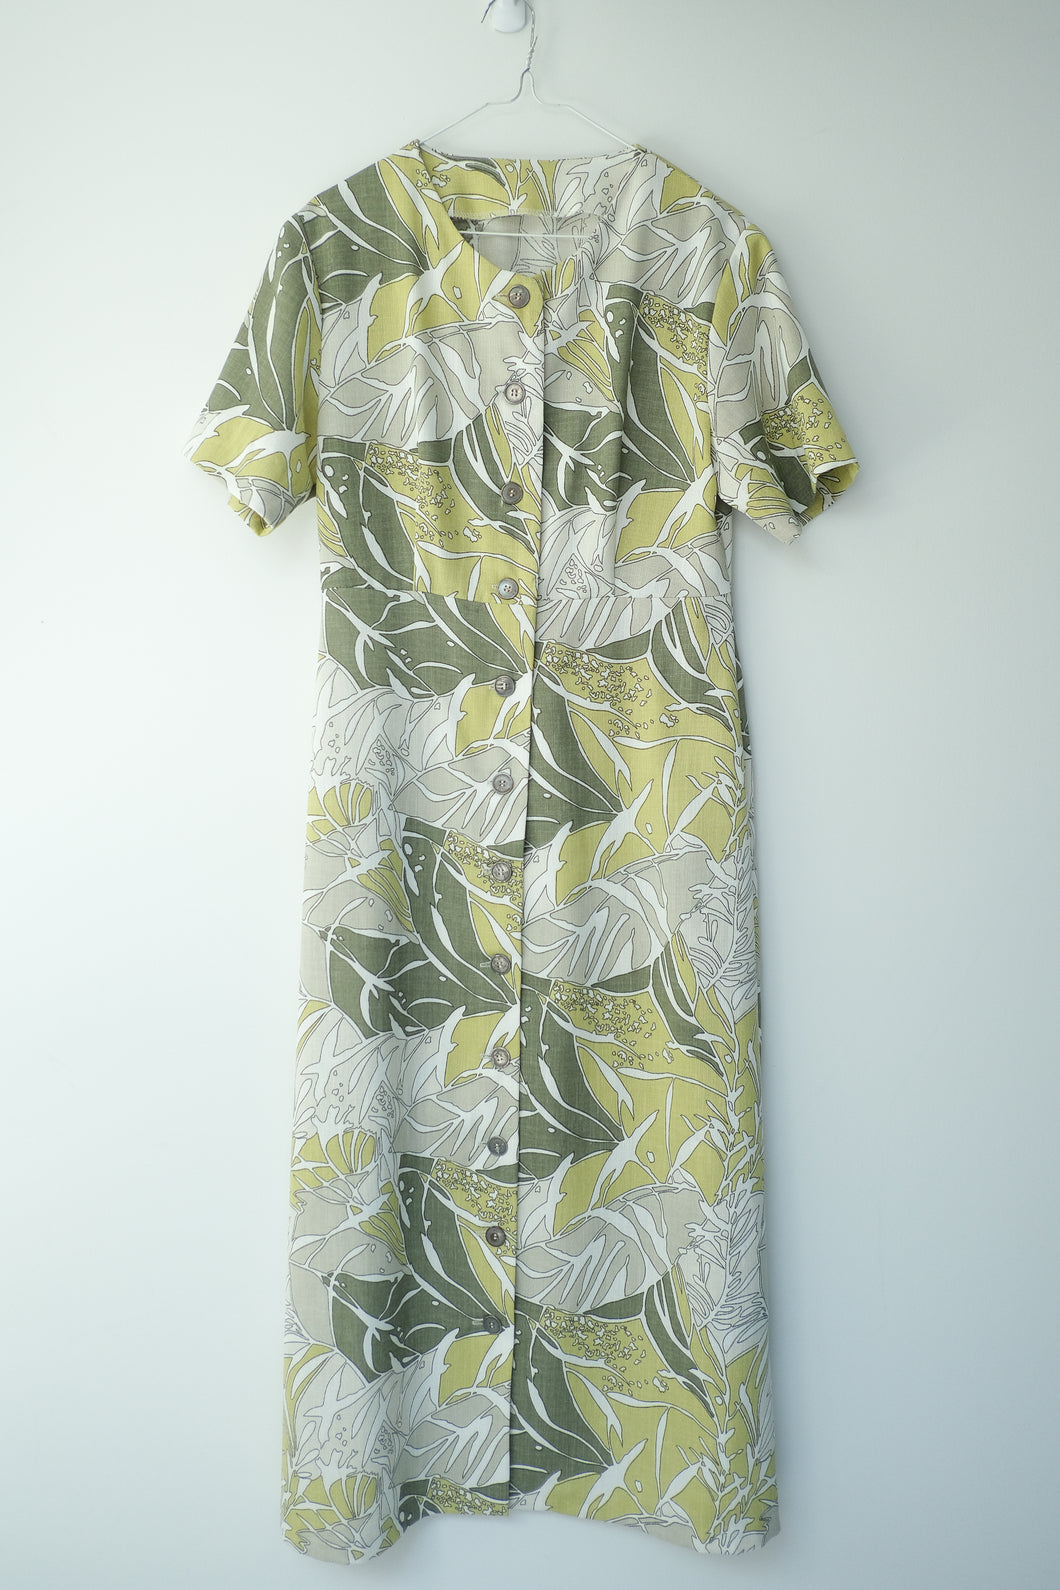 70s Plant Lady dress